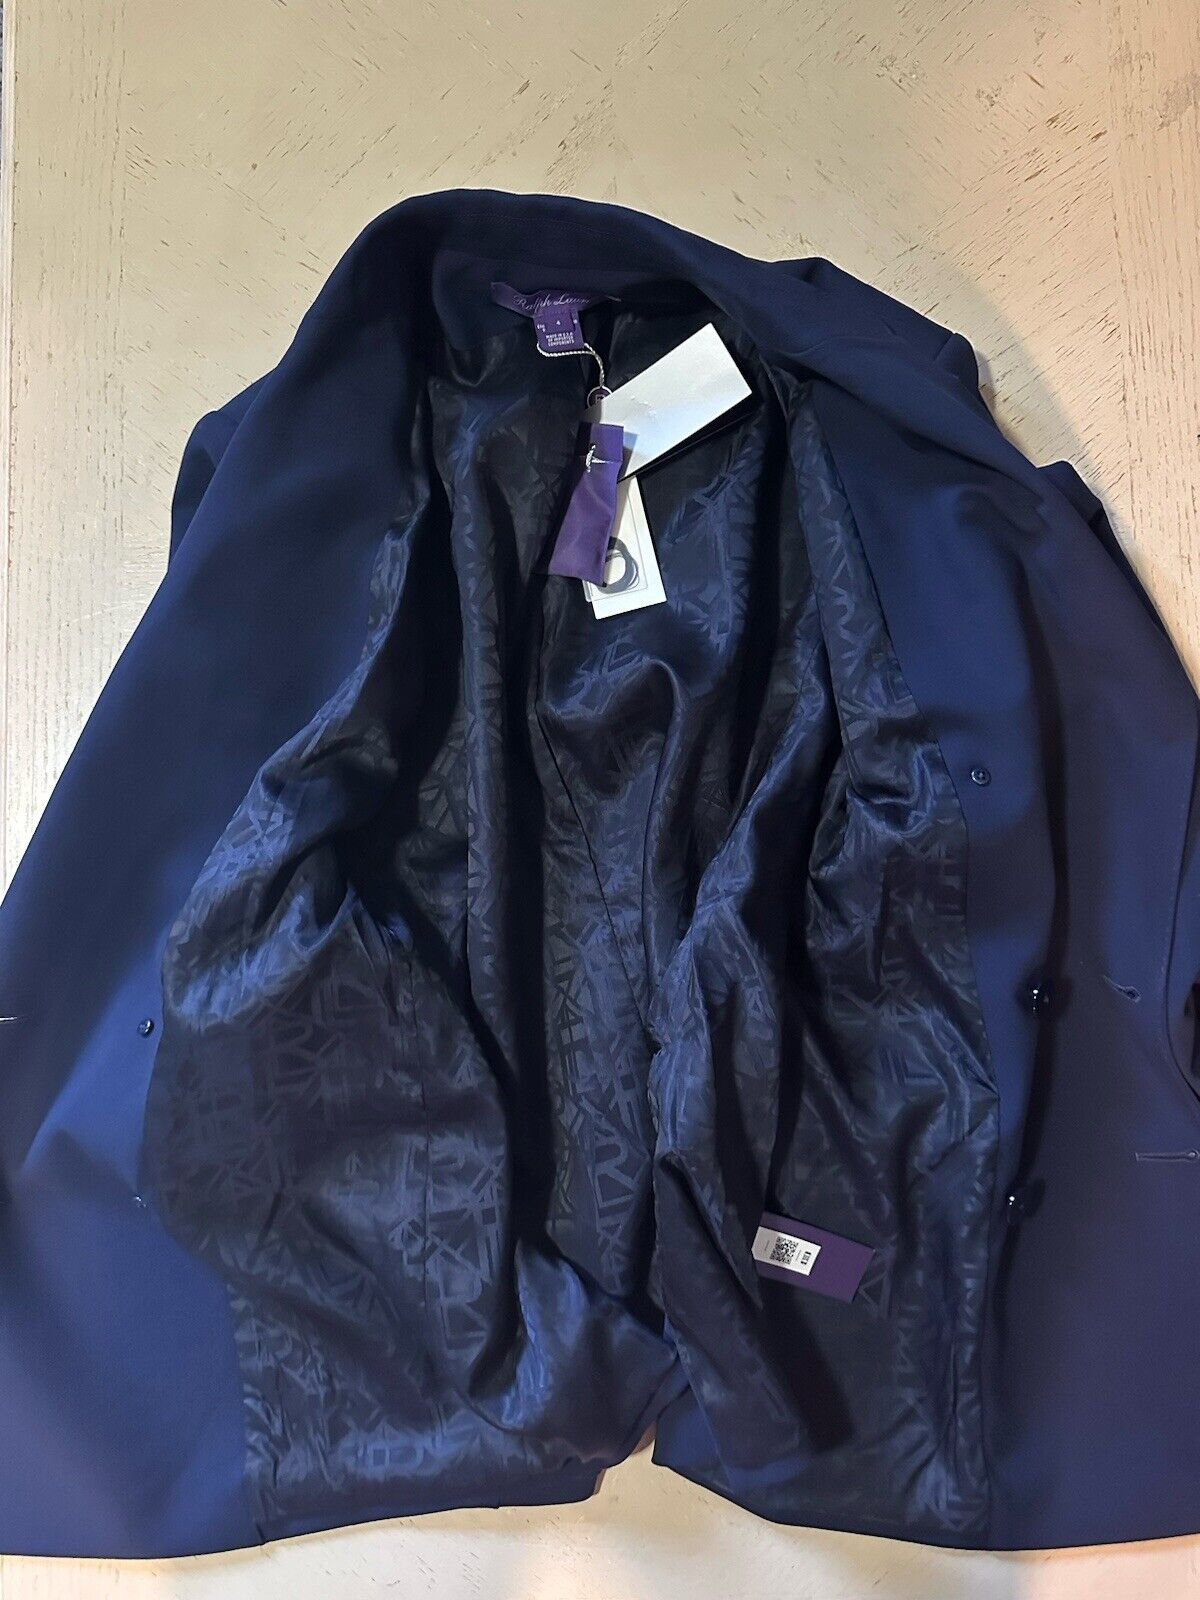 New $1995 Ralph Lauren Purple Label Women Jacket Blazer Navy Size 4 US